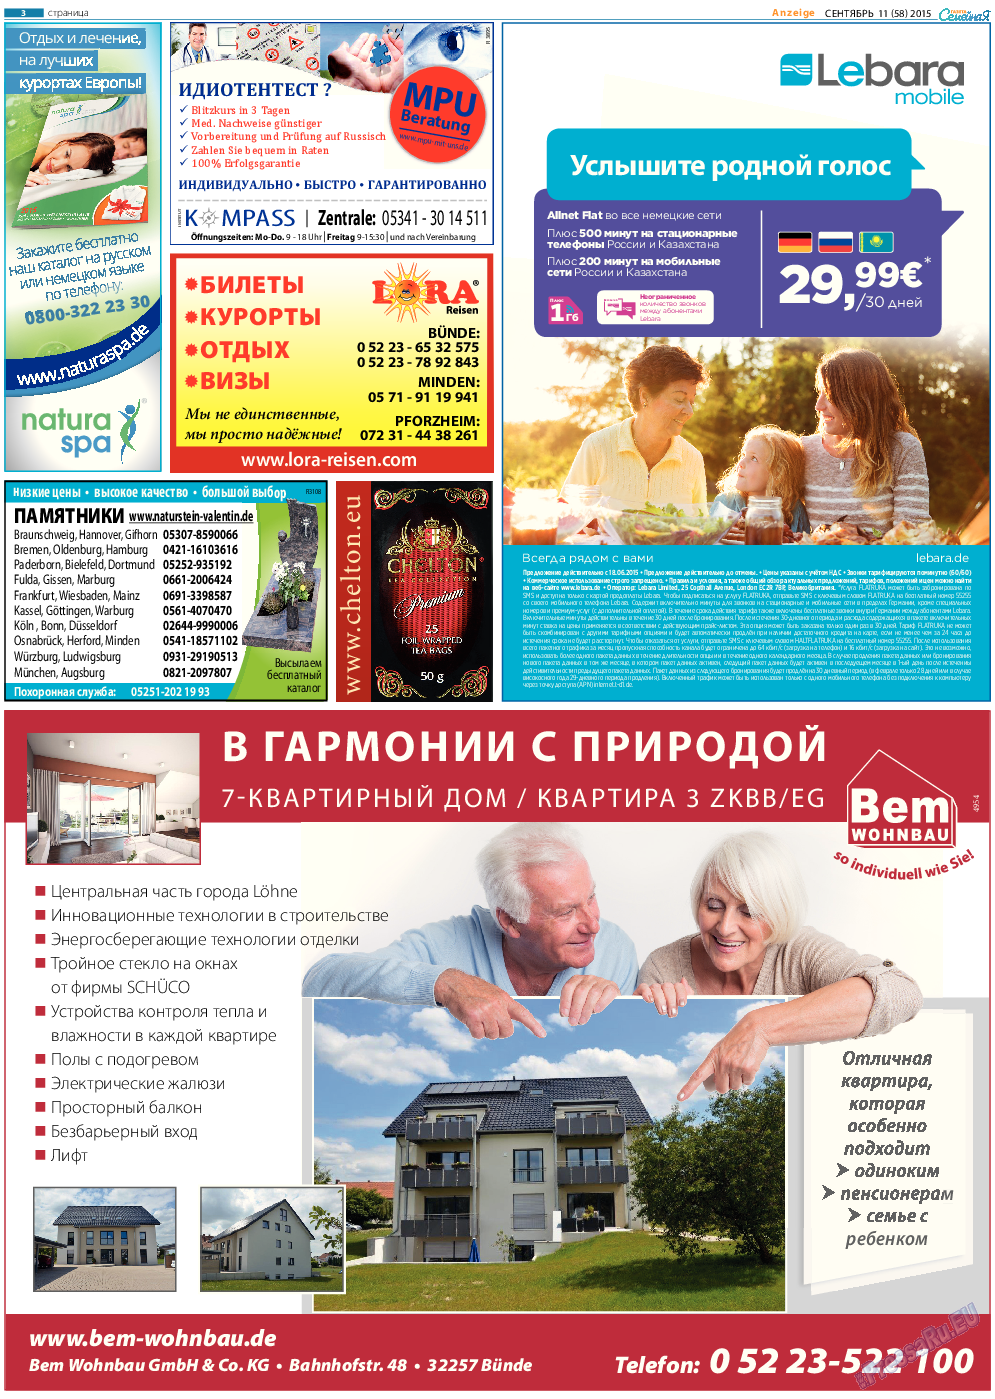 Семейная газета, газета. 2015 №11 стр.3